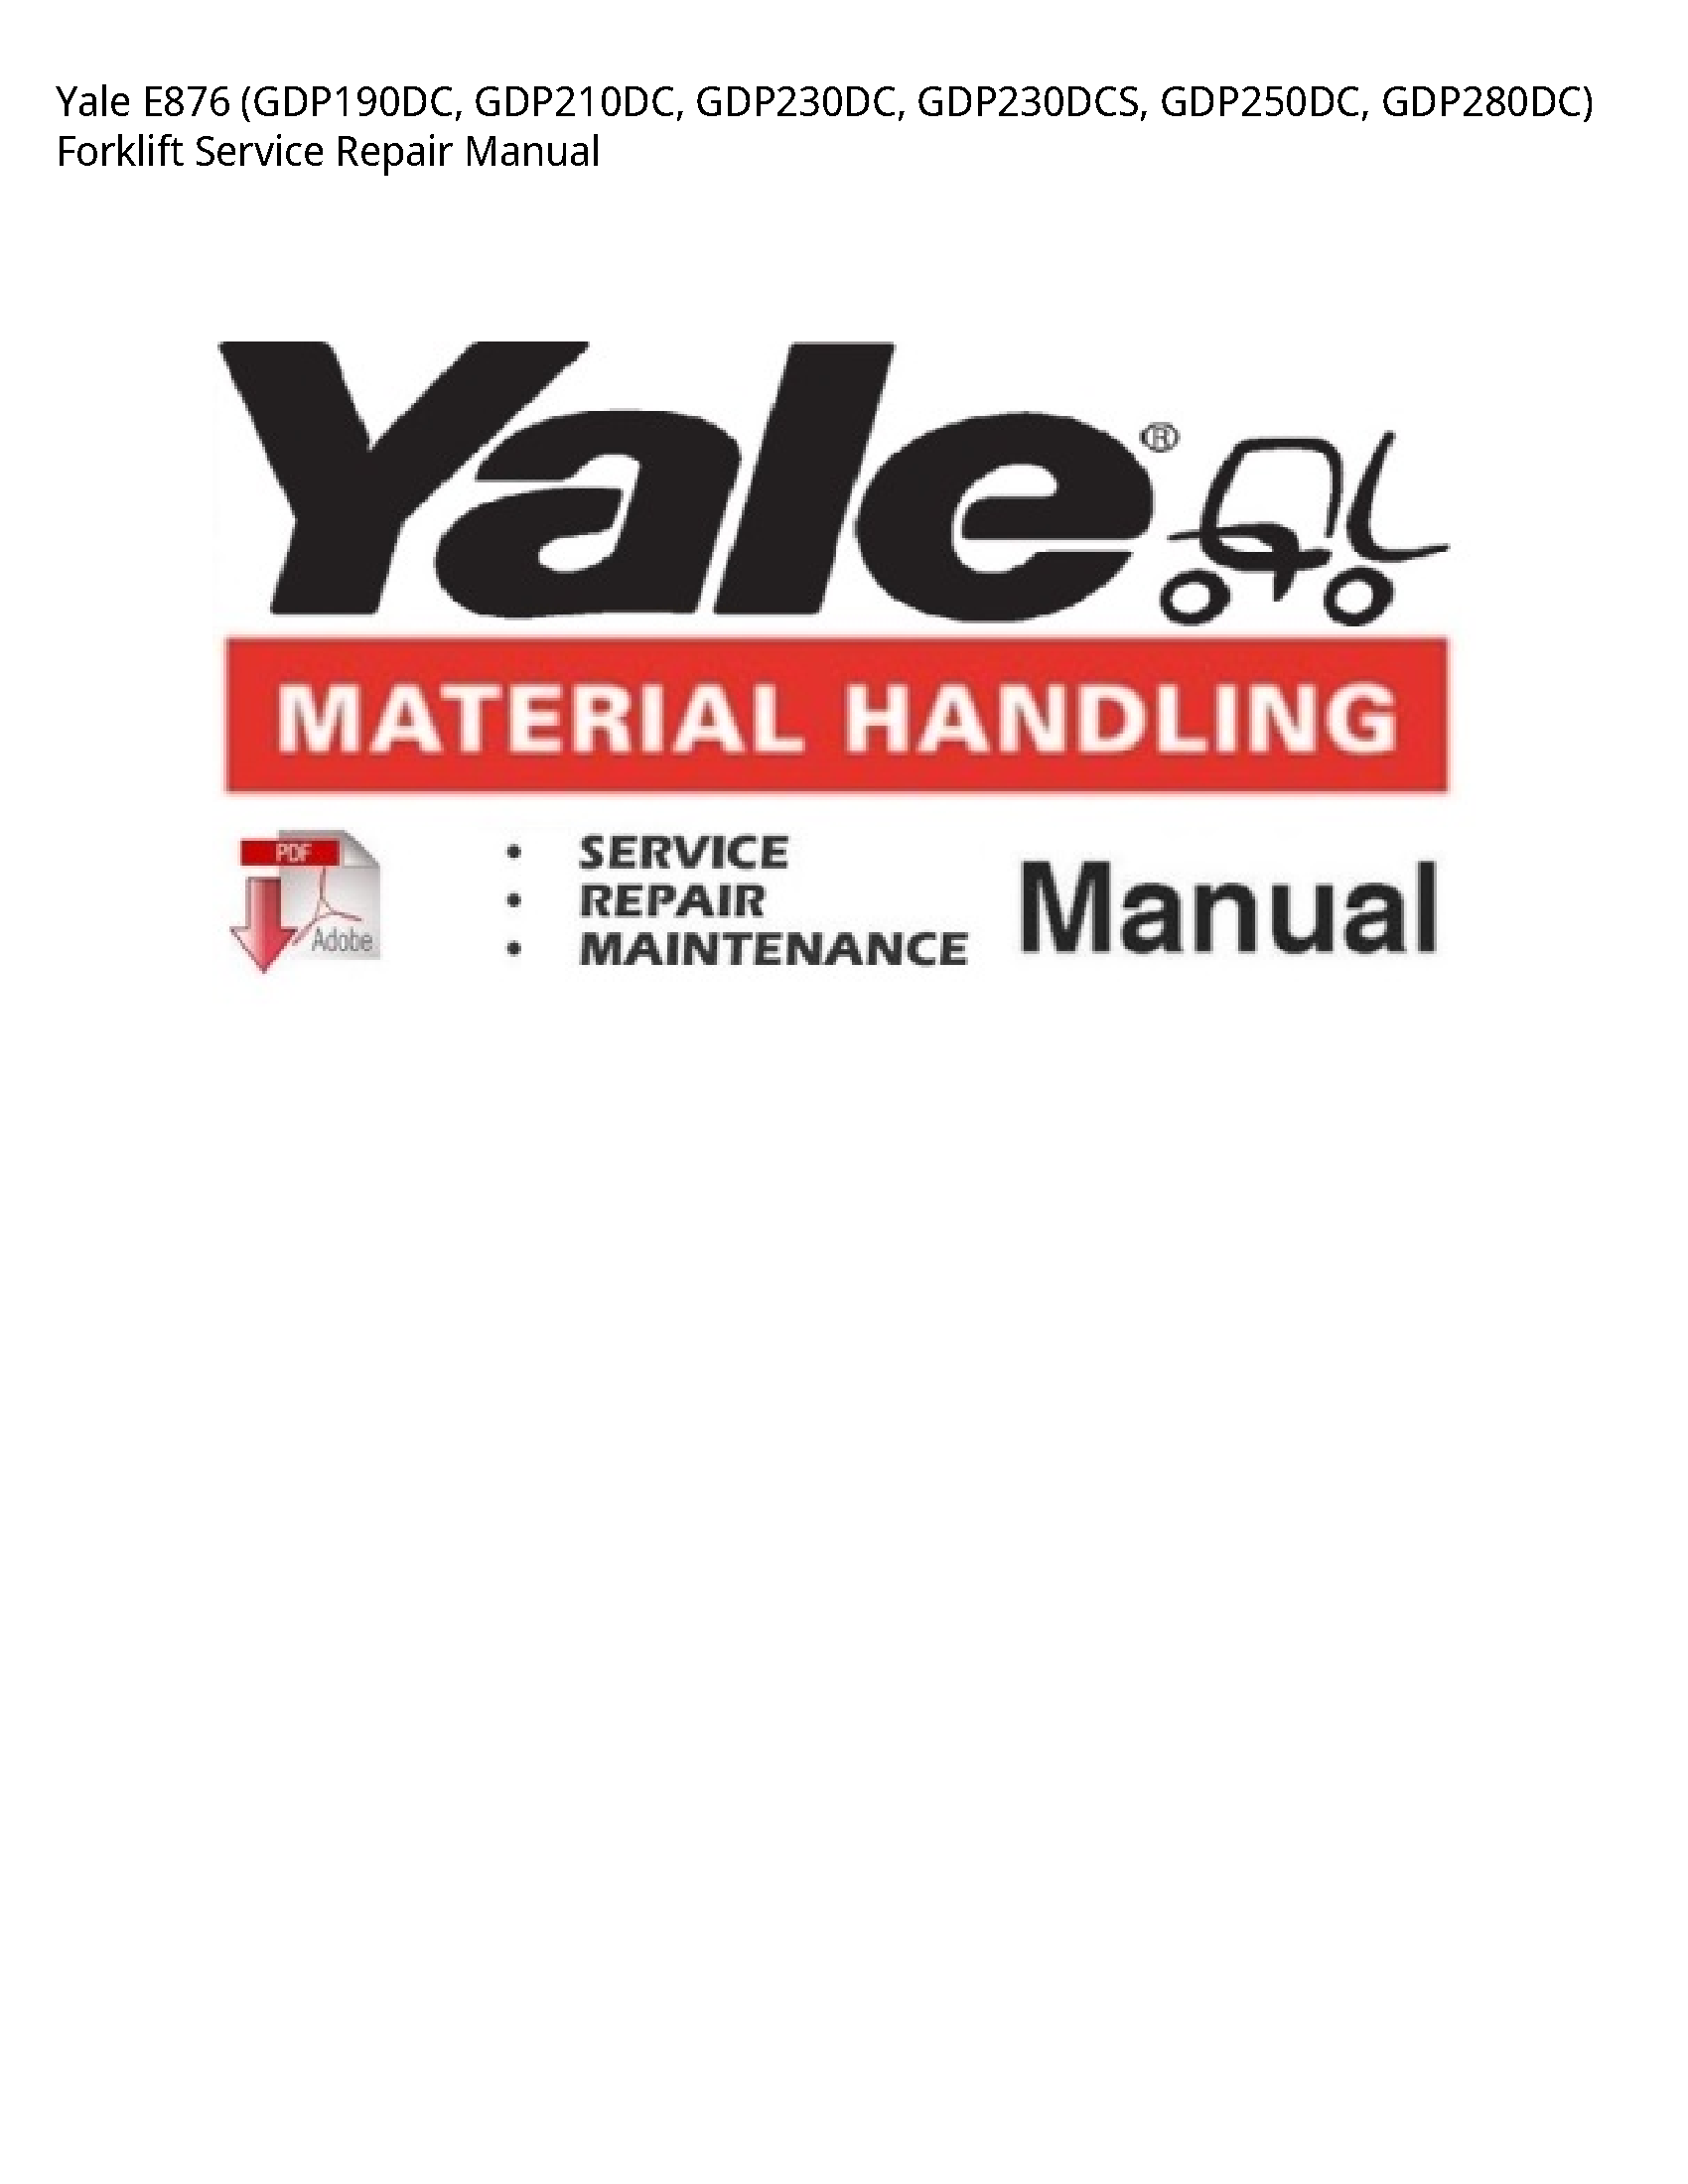 Yale E876 Forklift manual